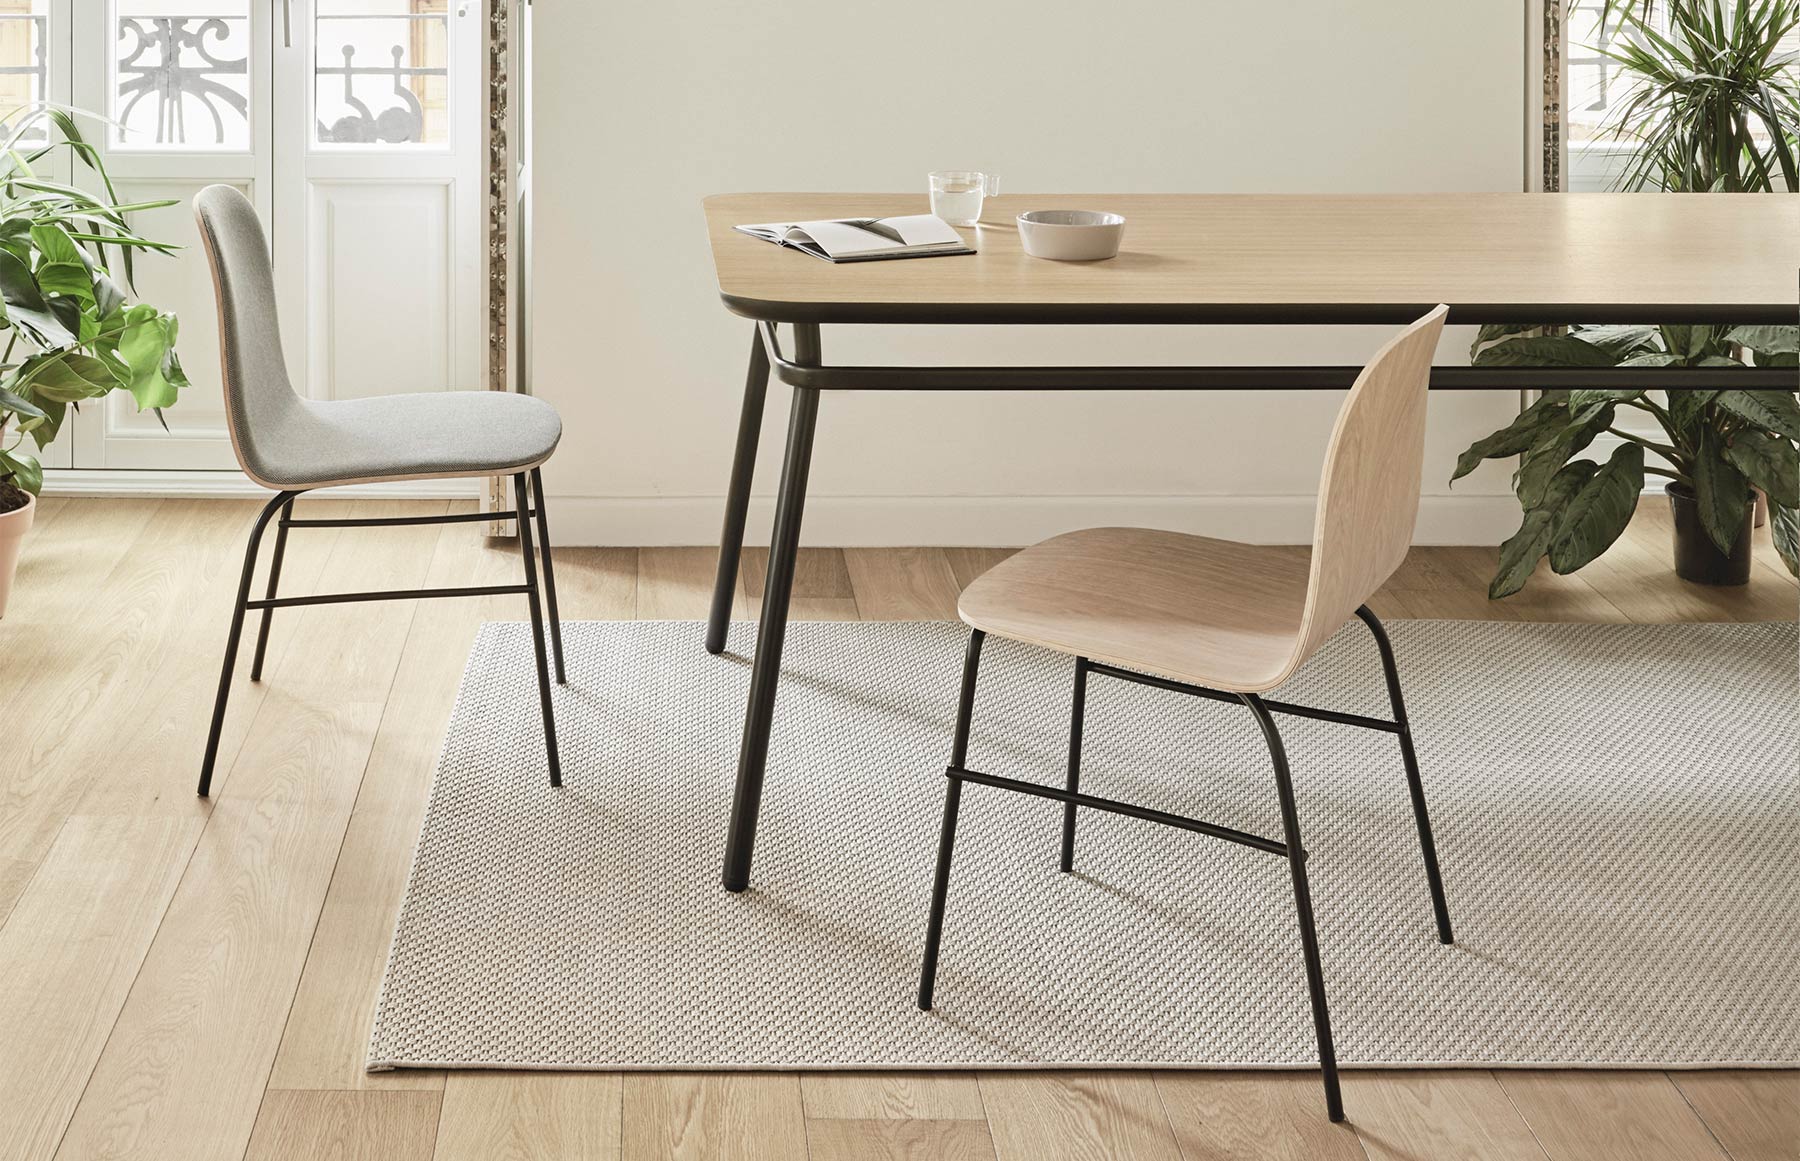 Iratzoki-Lizaso-Design-Lasso-Table